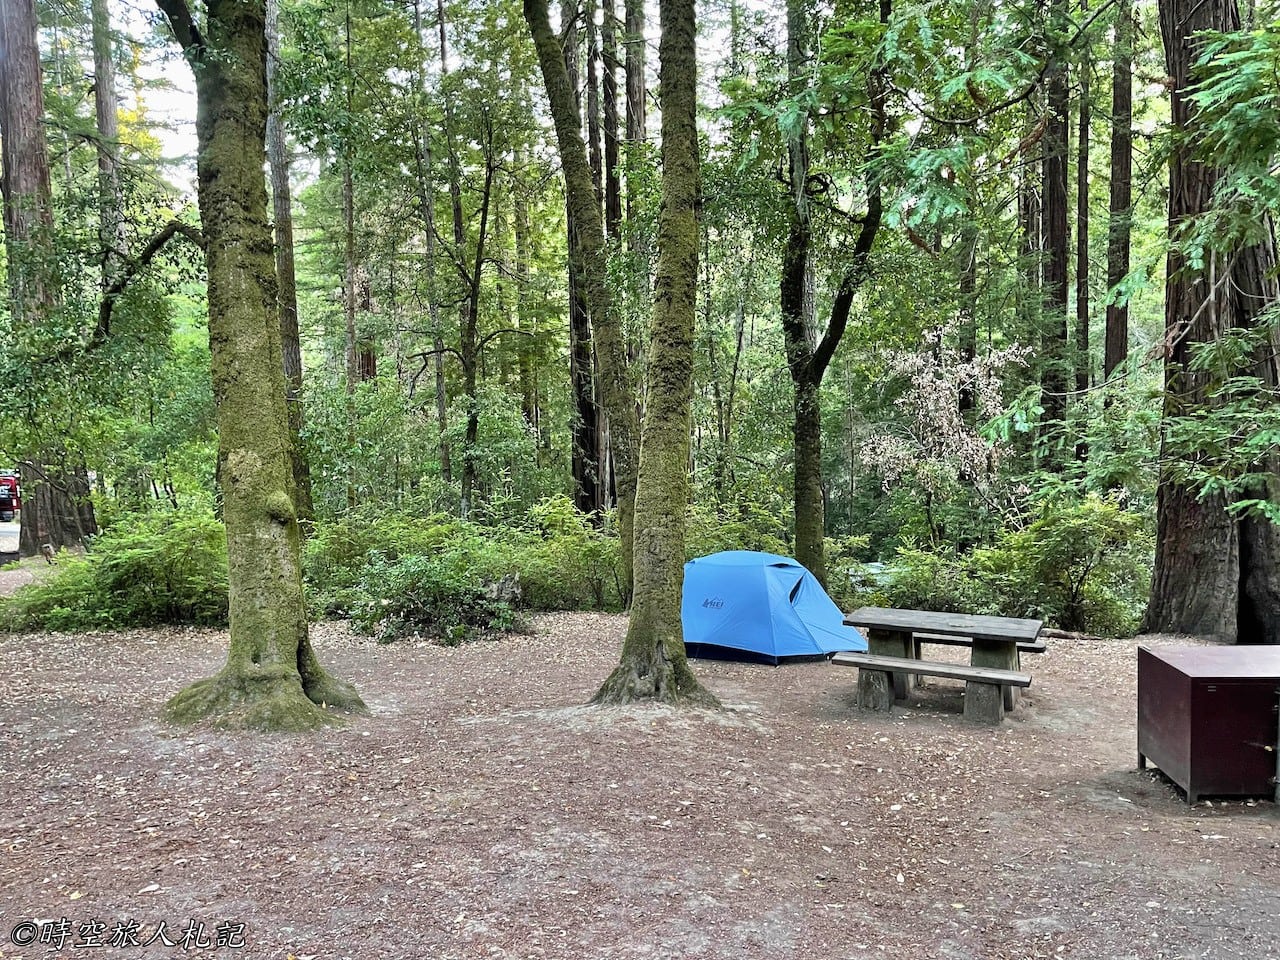 Portola redwood state park Camping